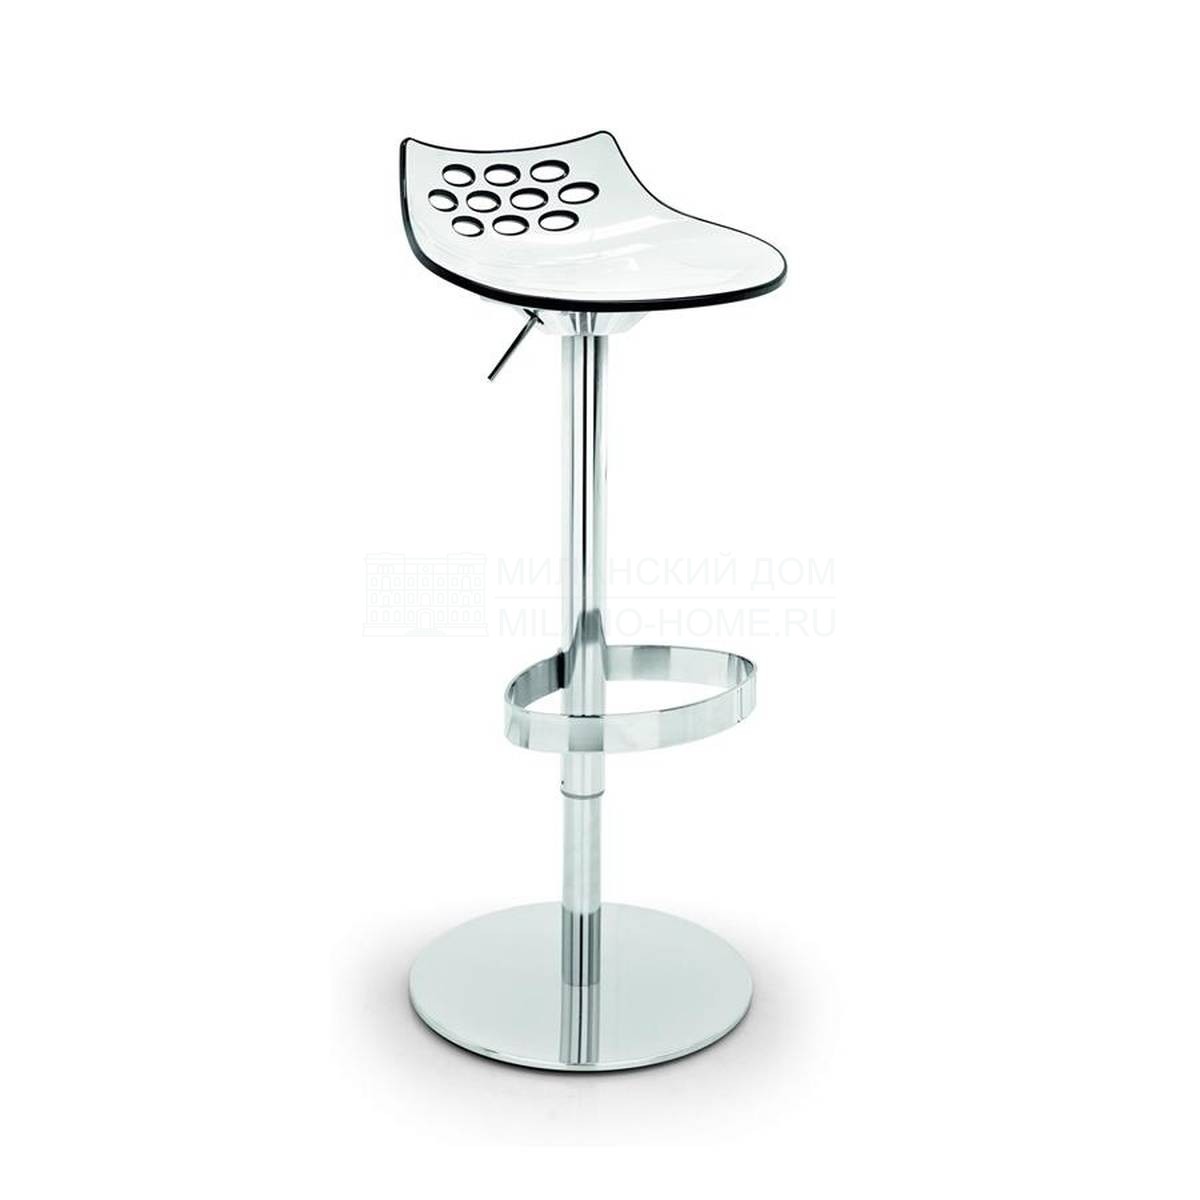 Барный стул Jam/stool из Италии фабрики ASTER Cucine